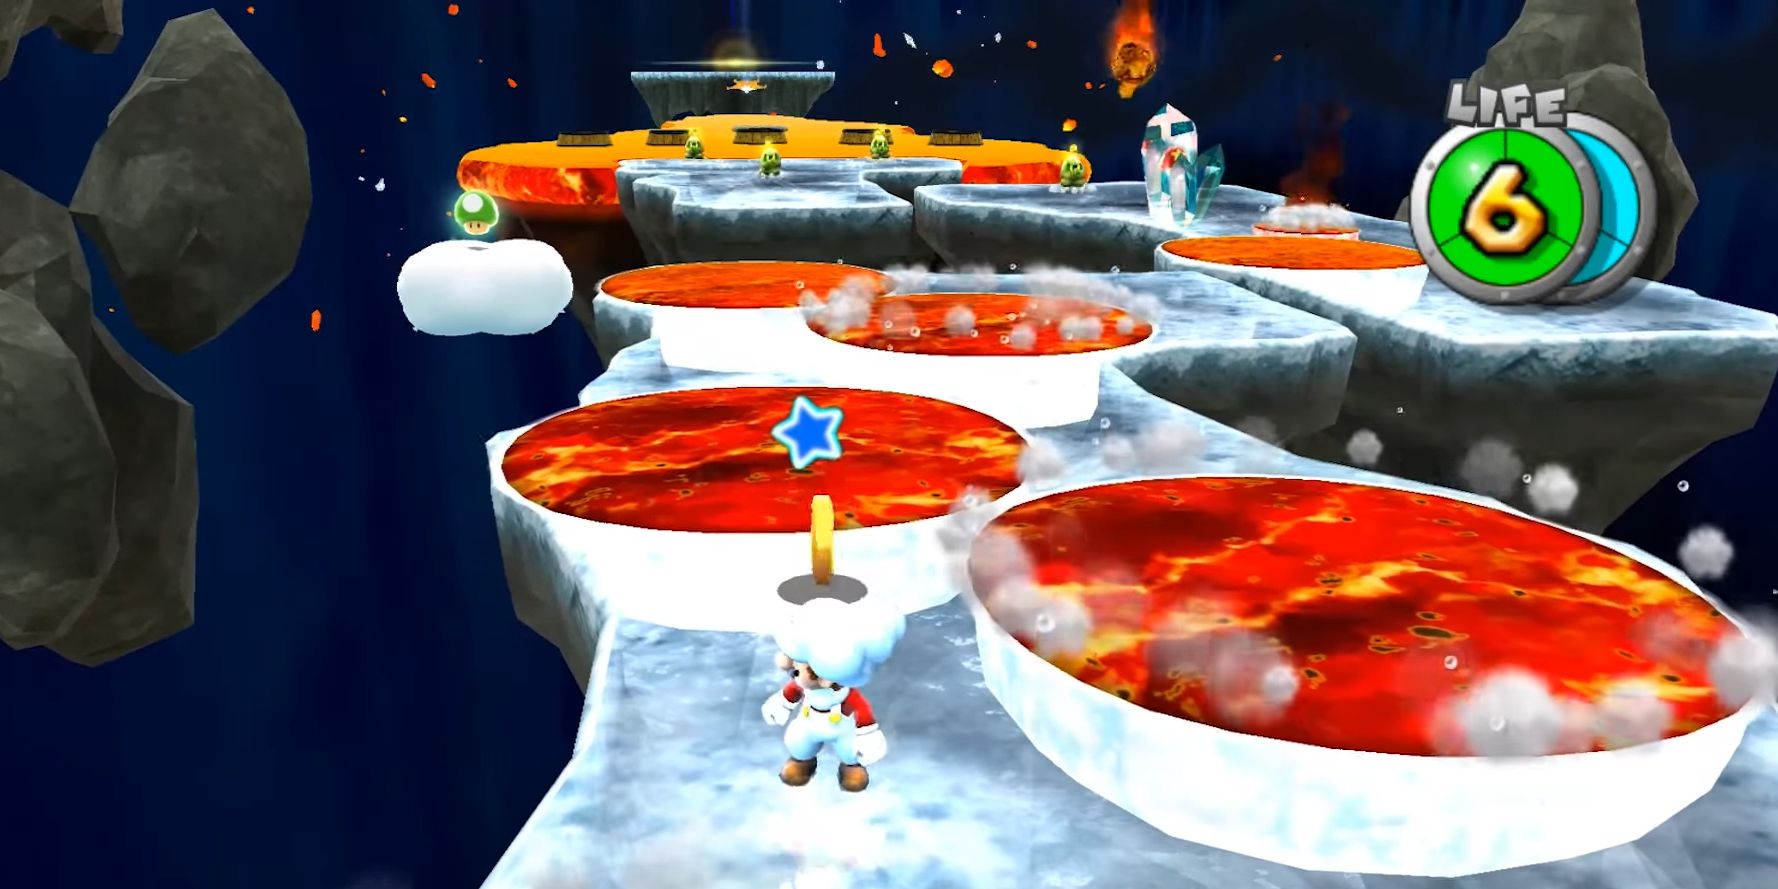 Mario traveling through Shiverburn Galaxy in Super Mario Galaxy 2